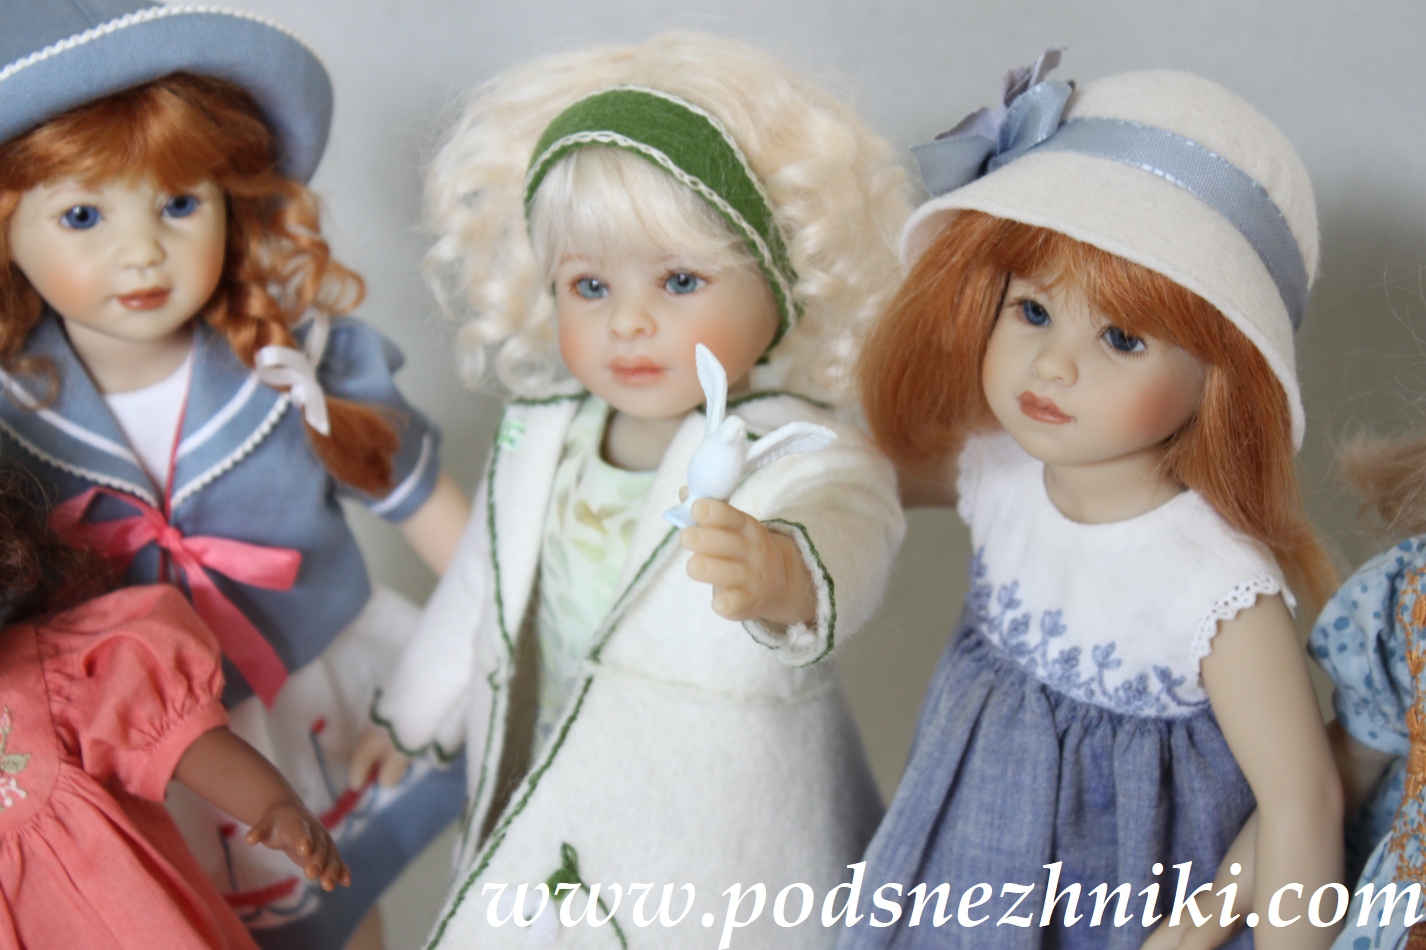 Heidi Plusczok Dolls Podsnezhniki